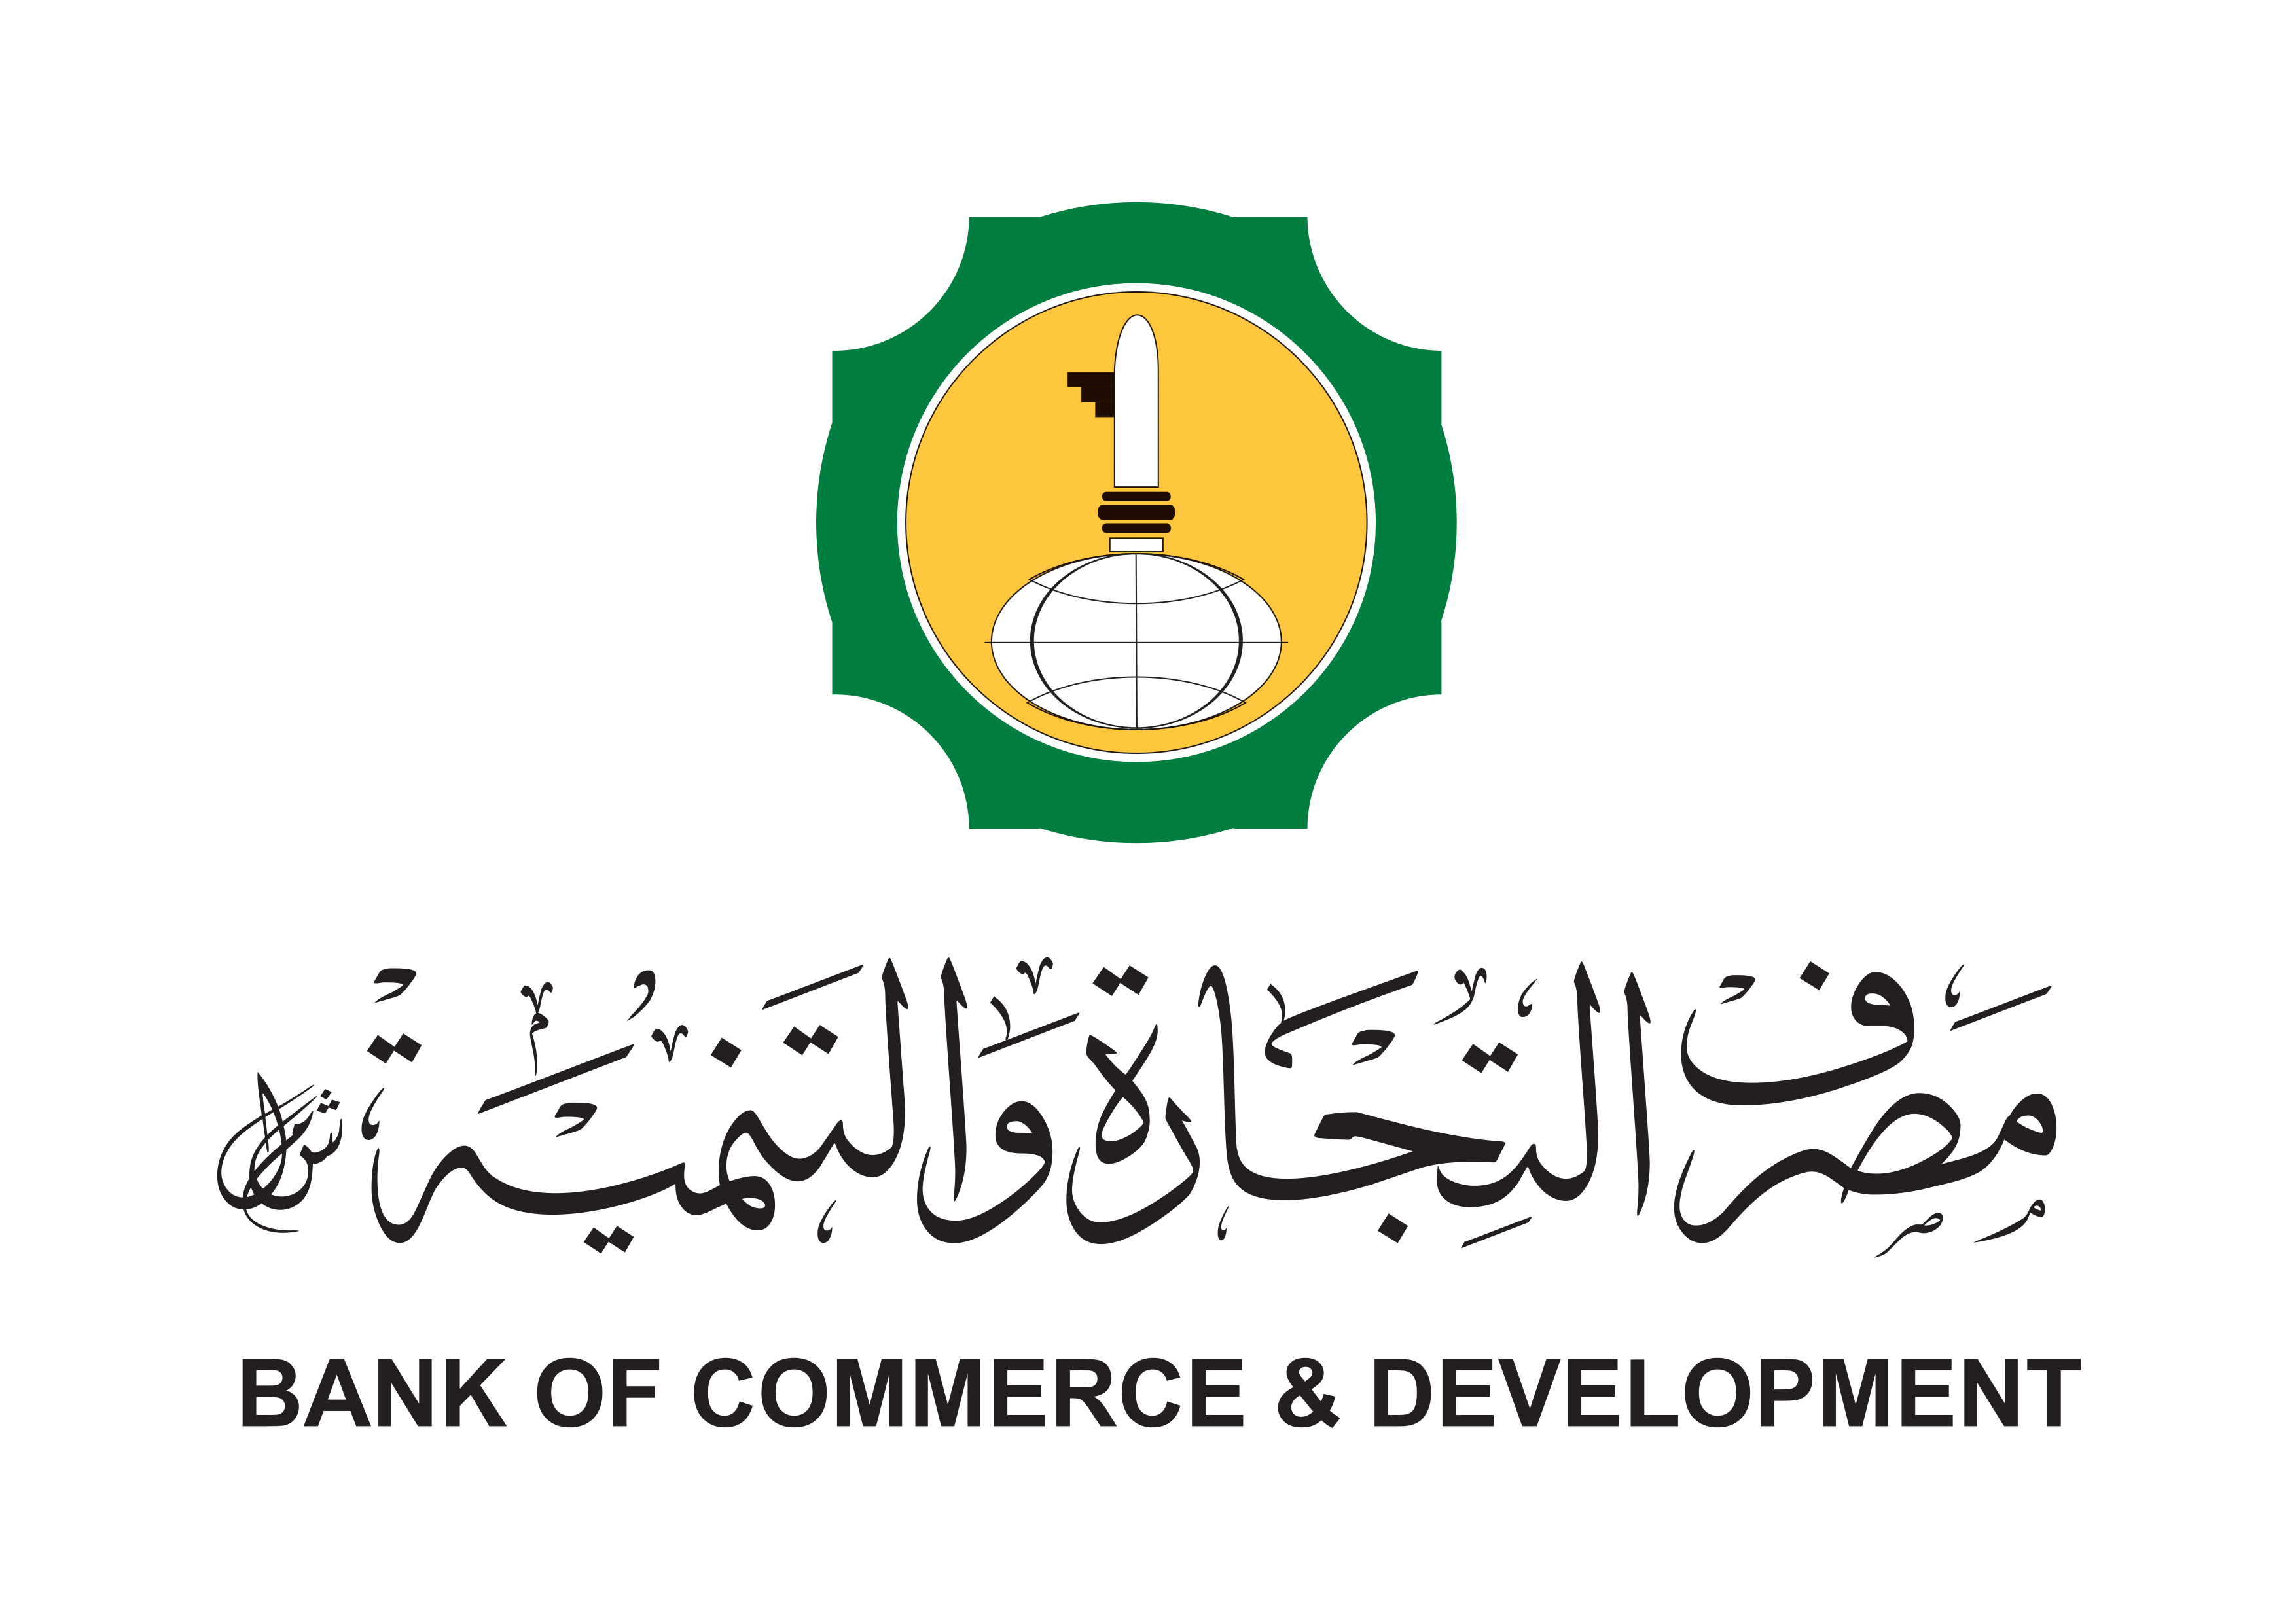 Bank of commerce & development